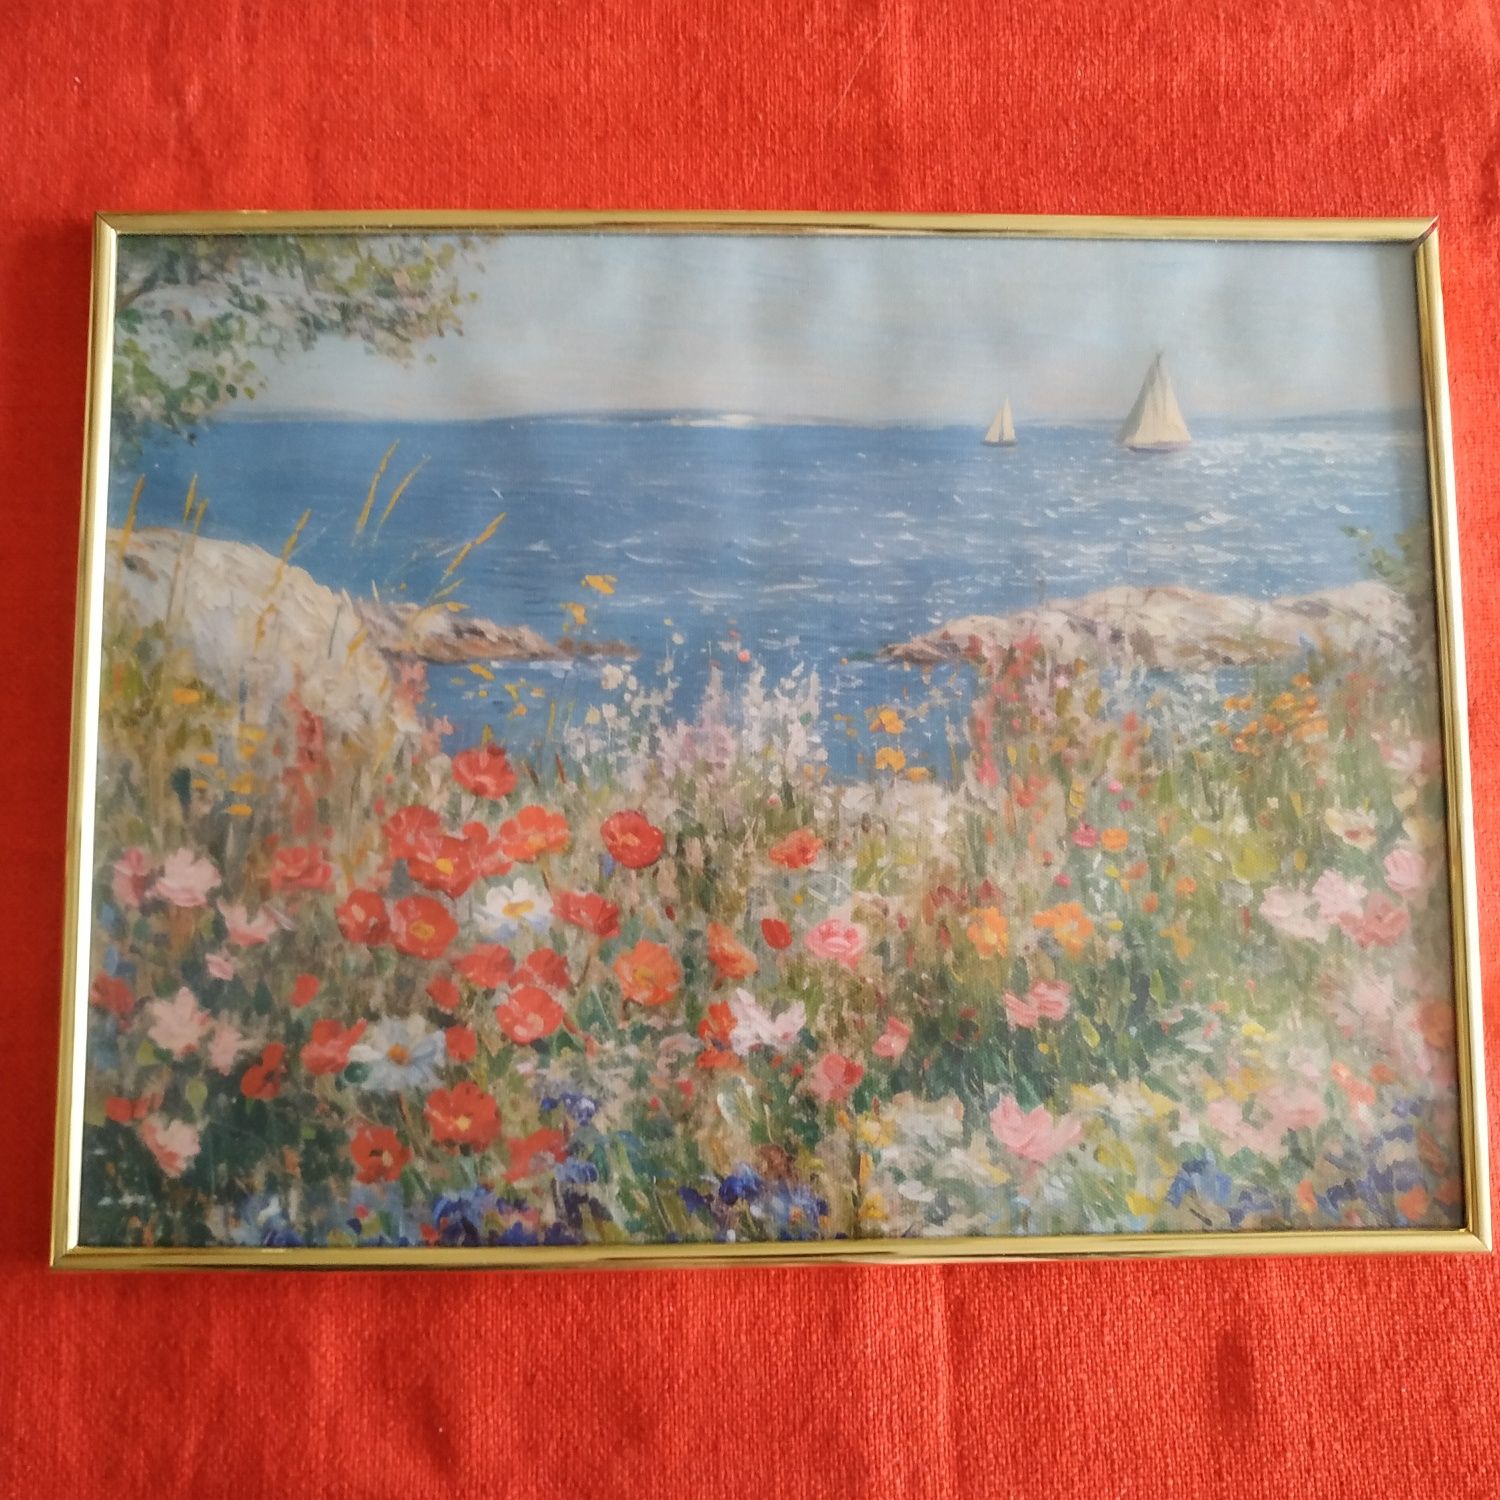 Obraz płótno Nadmorski pejzaż z łódkami i kwiatami cudowny na płótnie